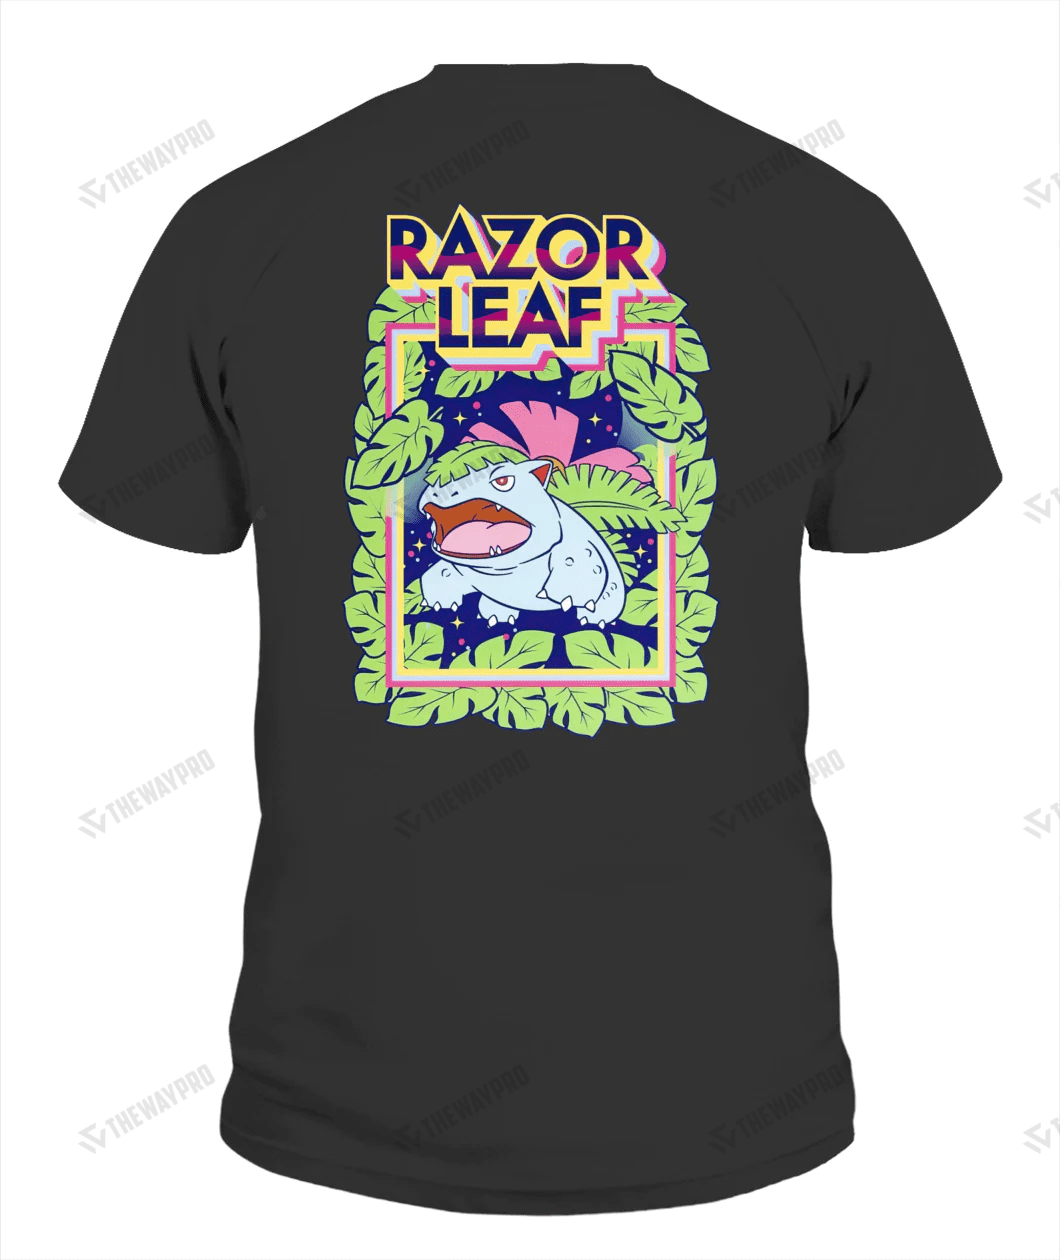 Razor Leaf Custom Graphic Apparel